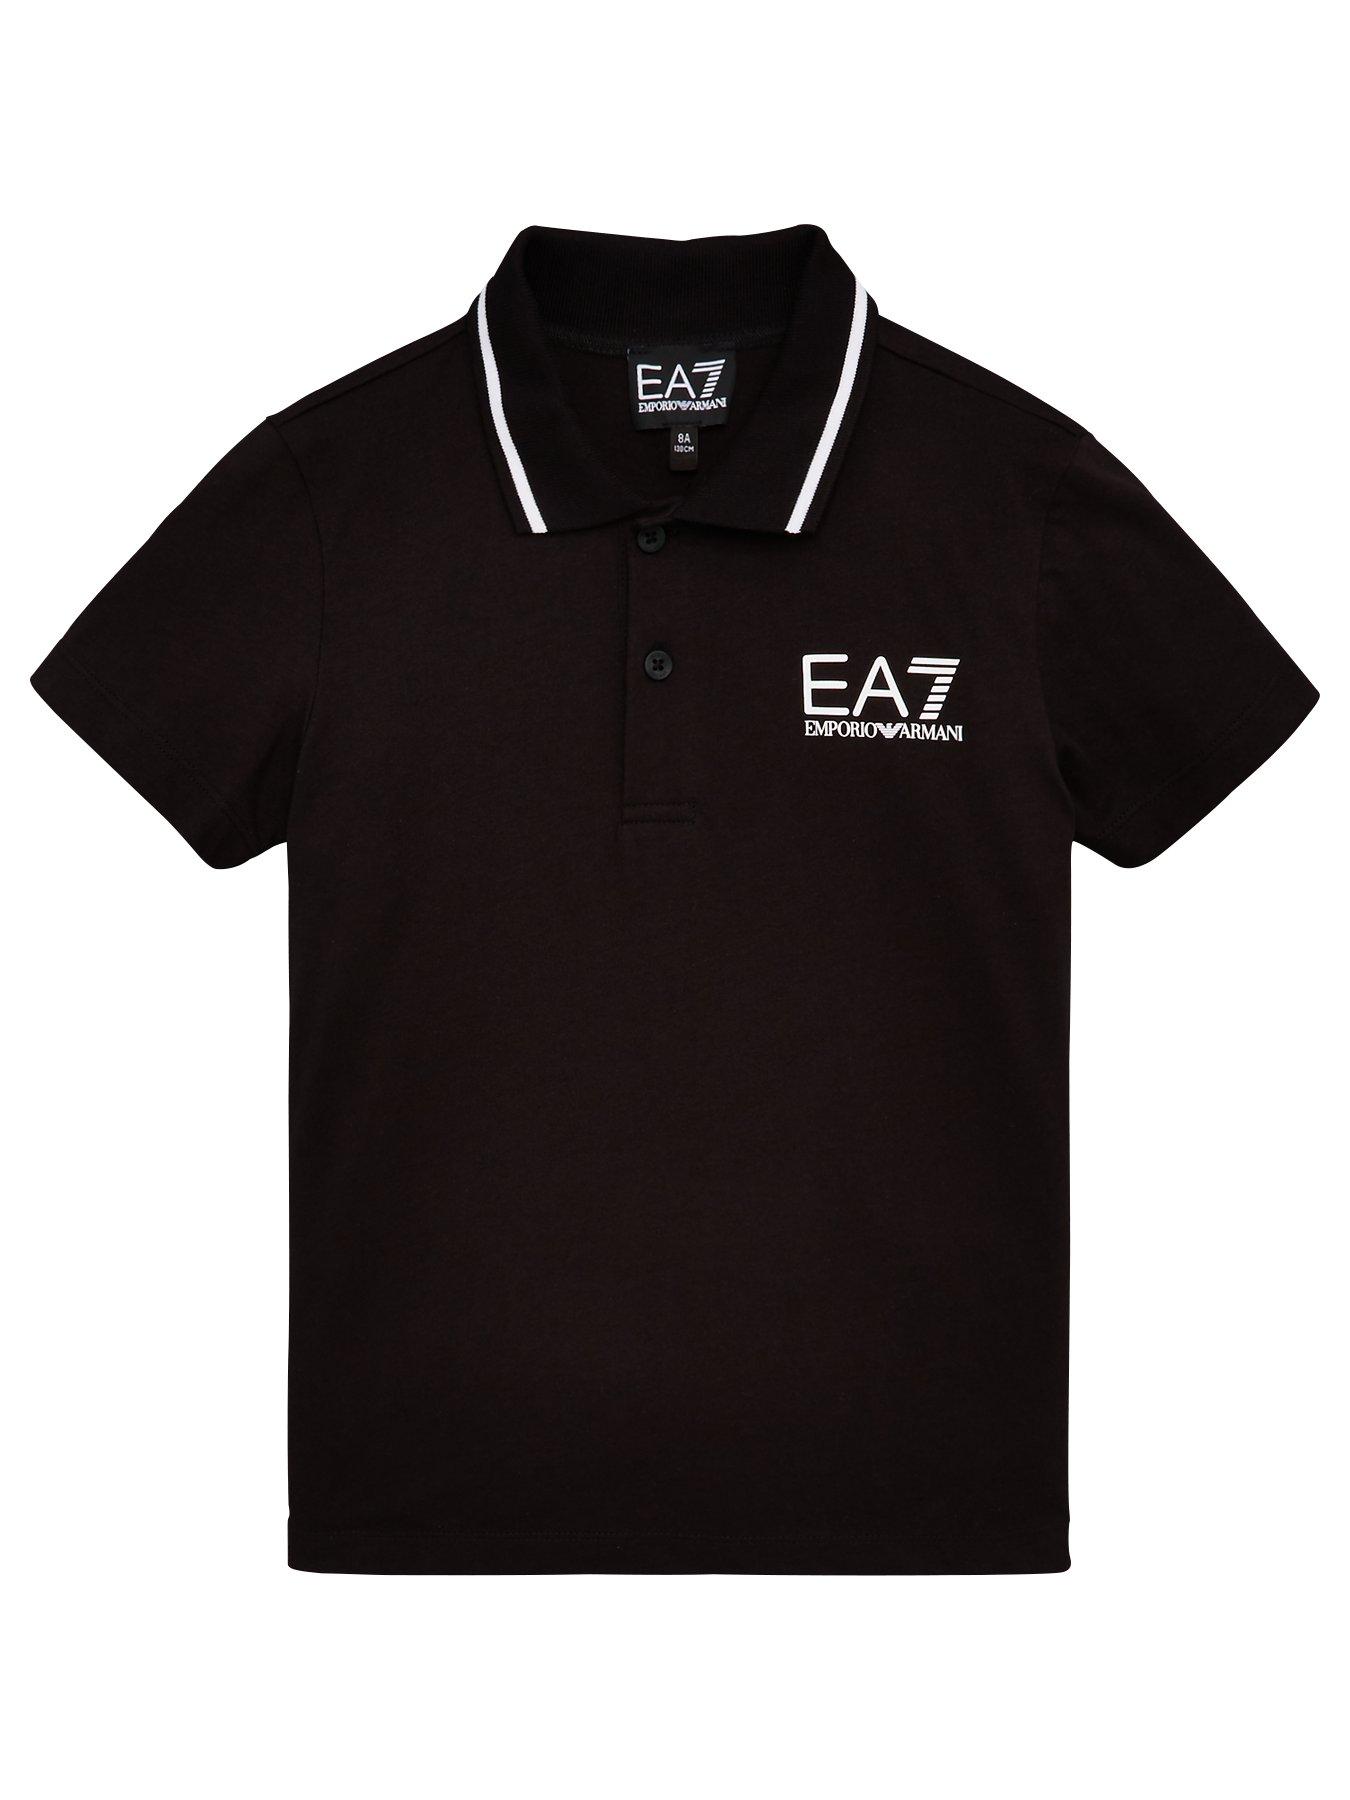 ea7 sweatshirt black